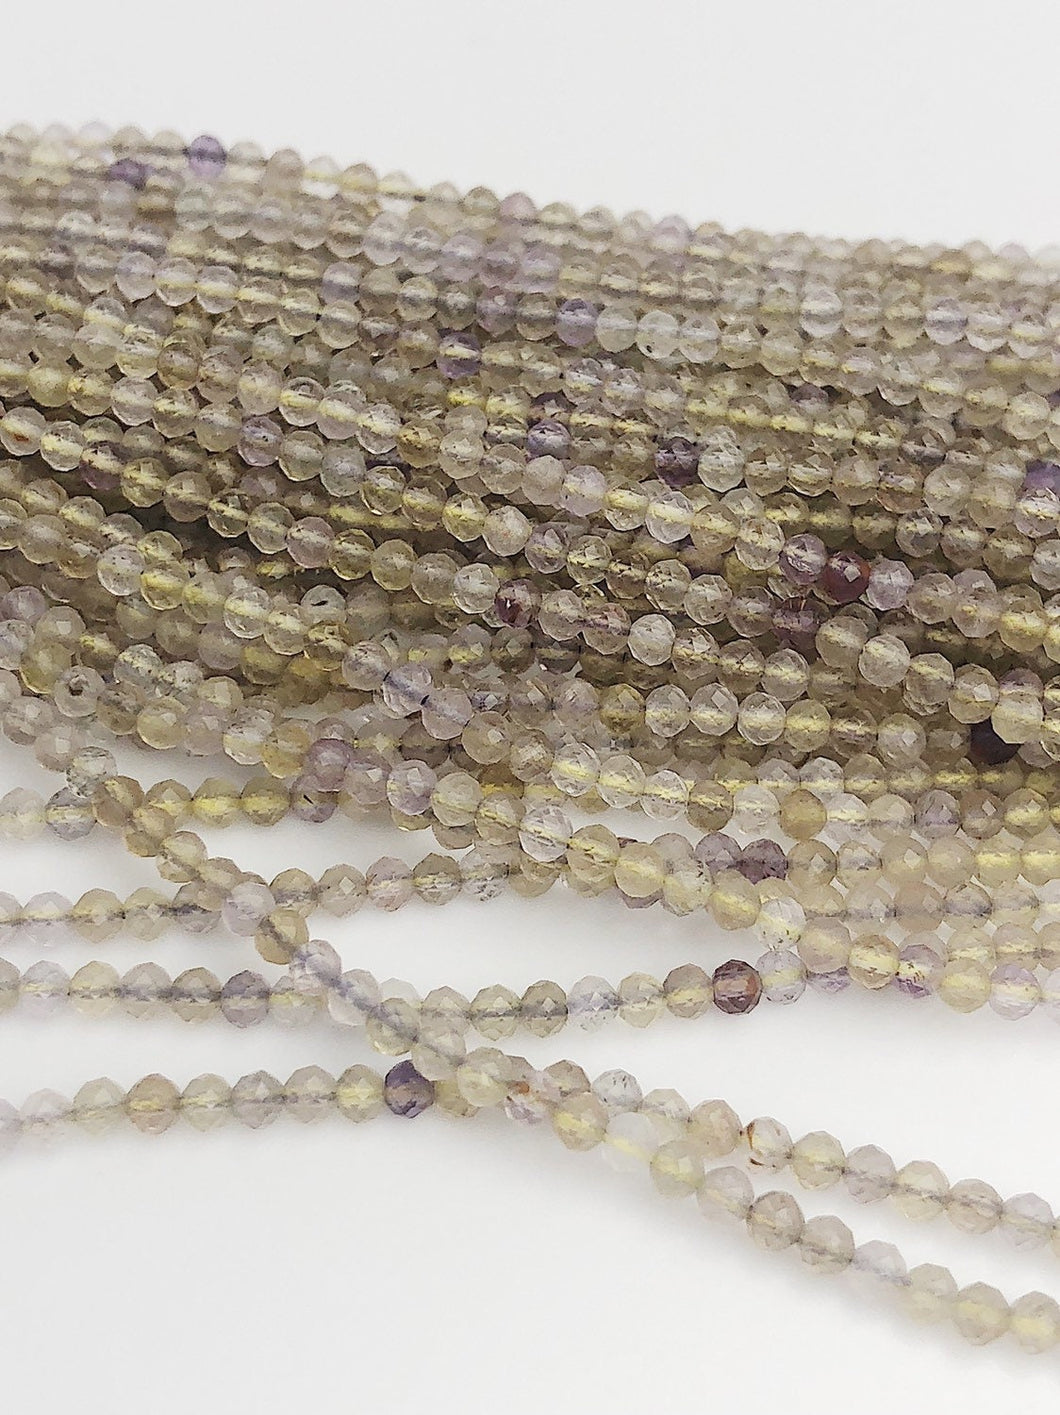 HALF OFF SALE - Ametrine Gemstone Beads, Full Strand, Semi Precious Gemstone, 13